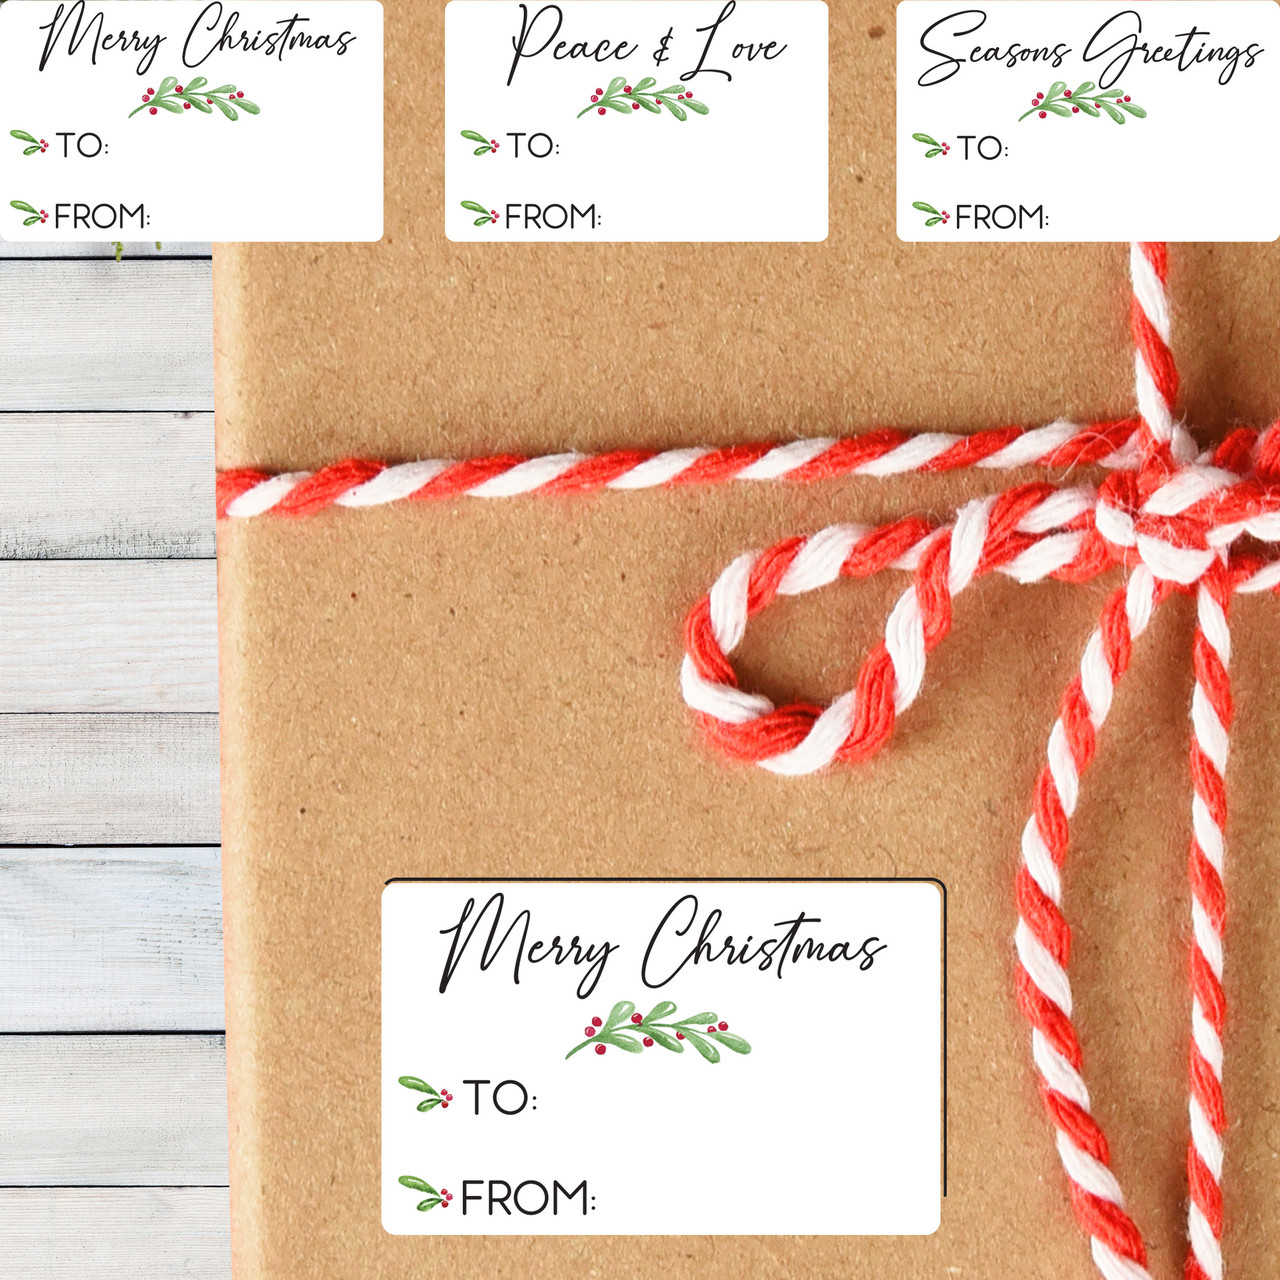 Seasons Greetings Christmas Gift Labels